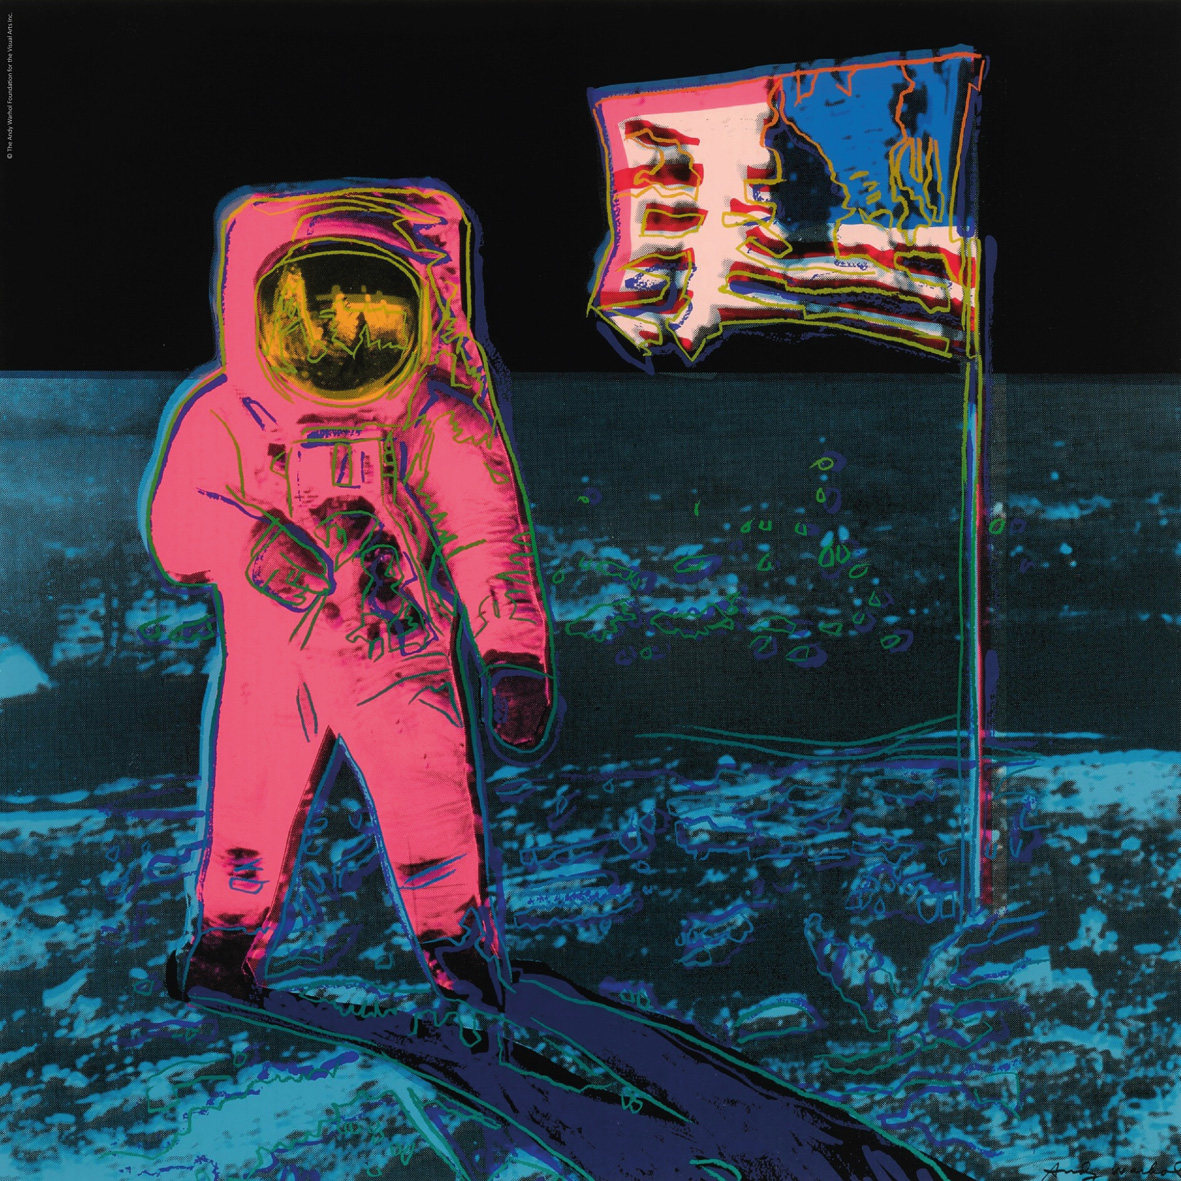 Immagine:Andy Warhol, Moonwalk, 1987, serigrafia, The Andy Warhol Foundation for the Visual Arts